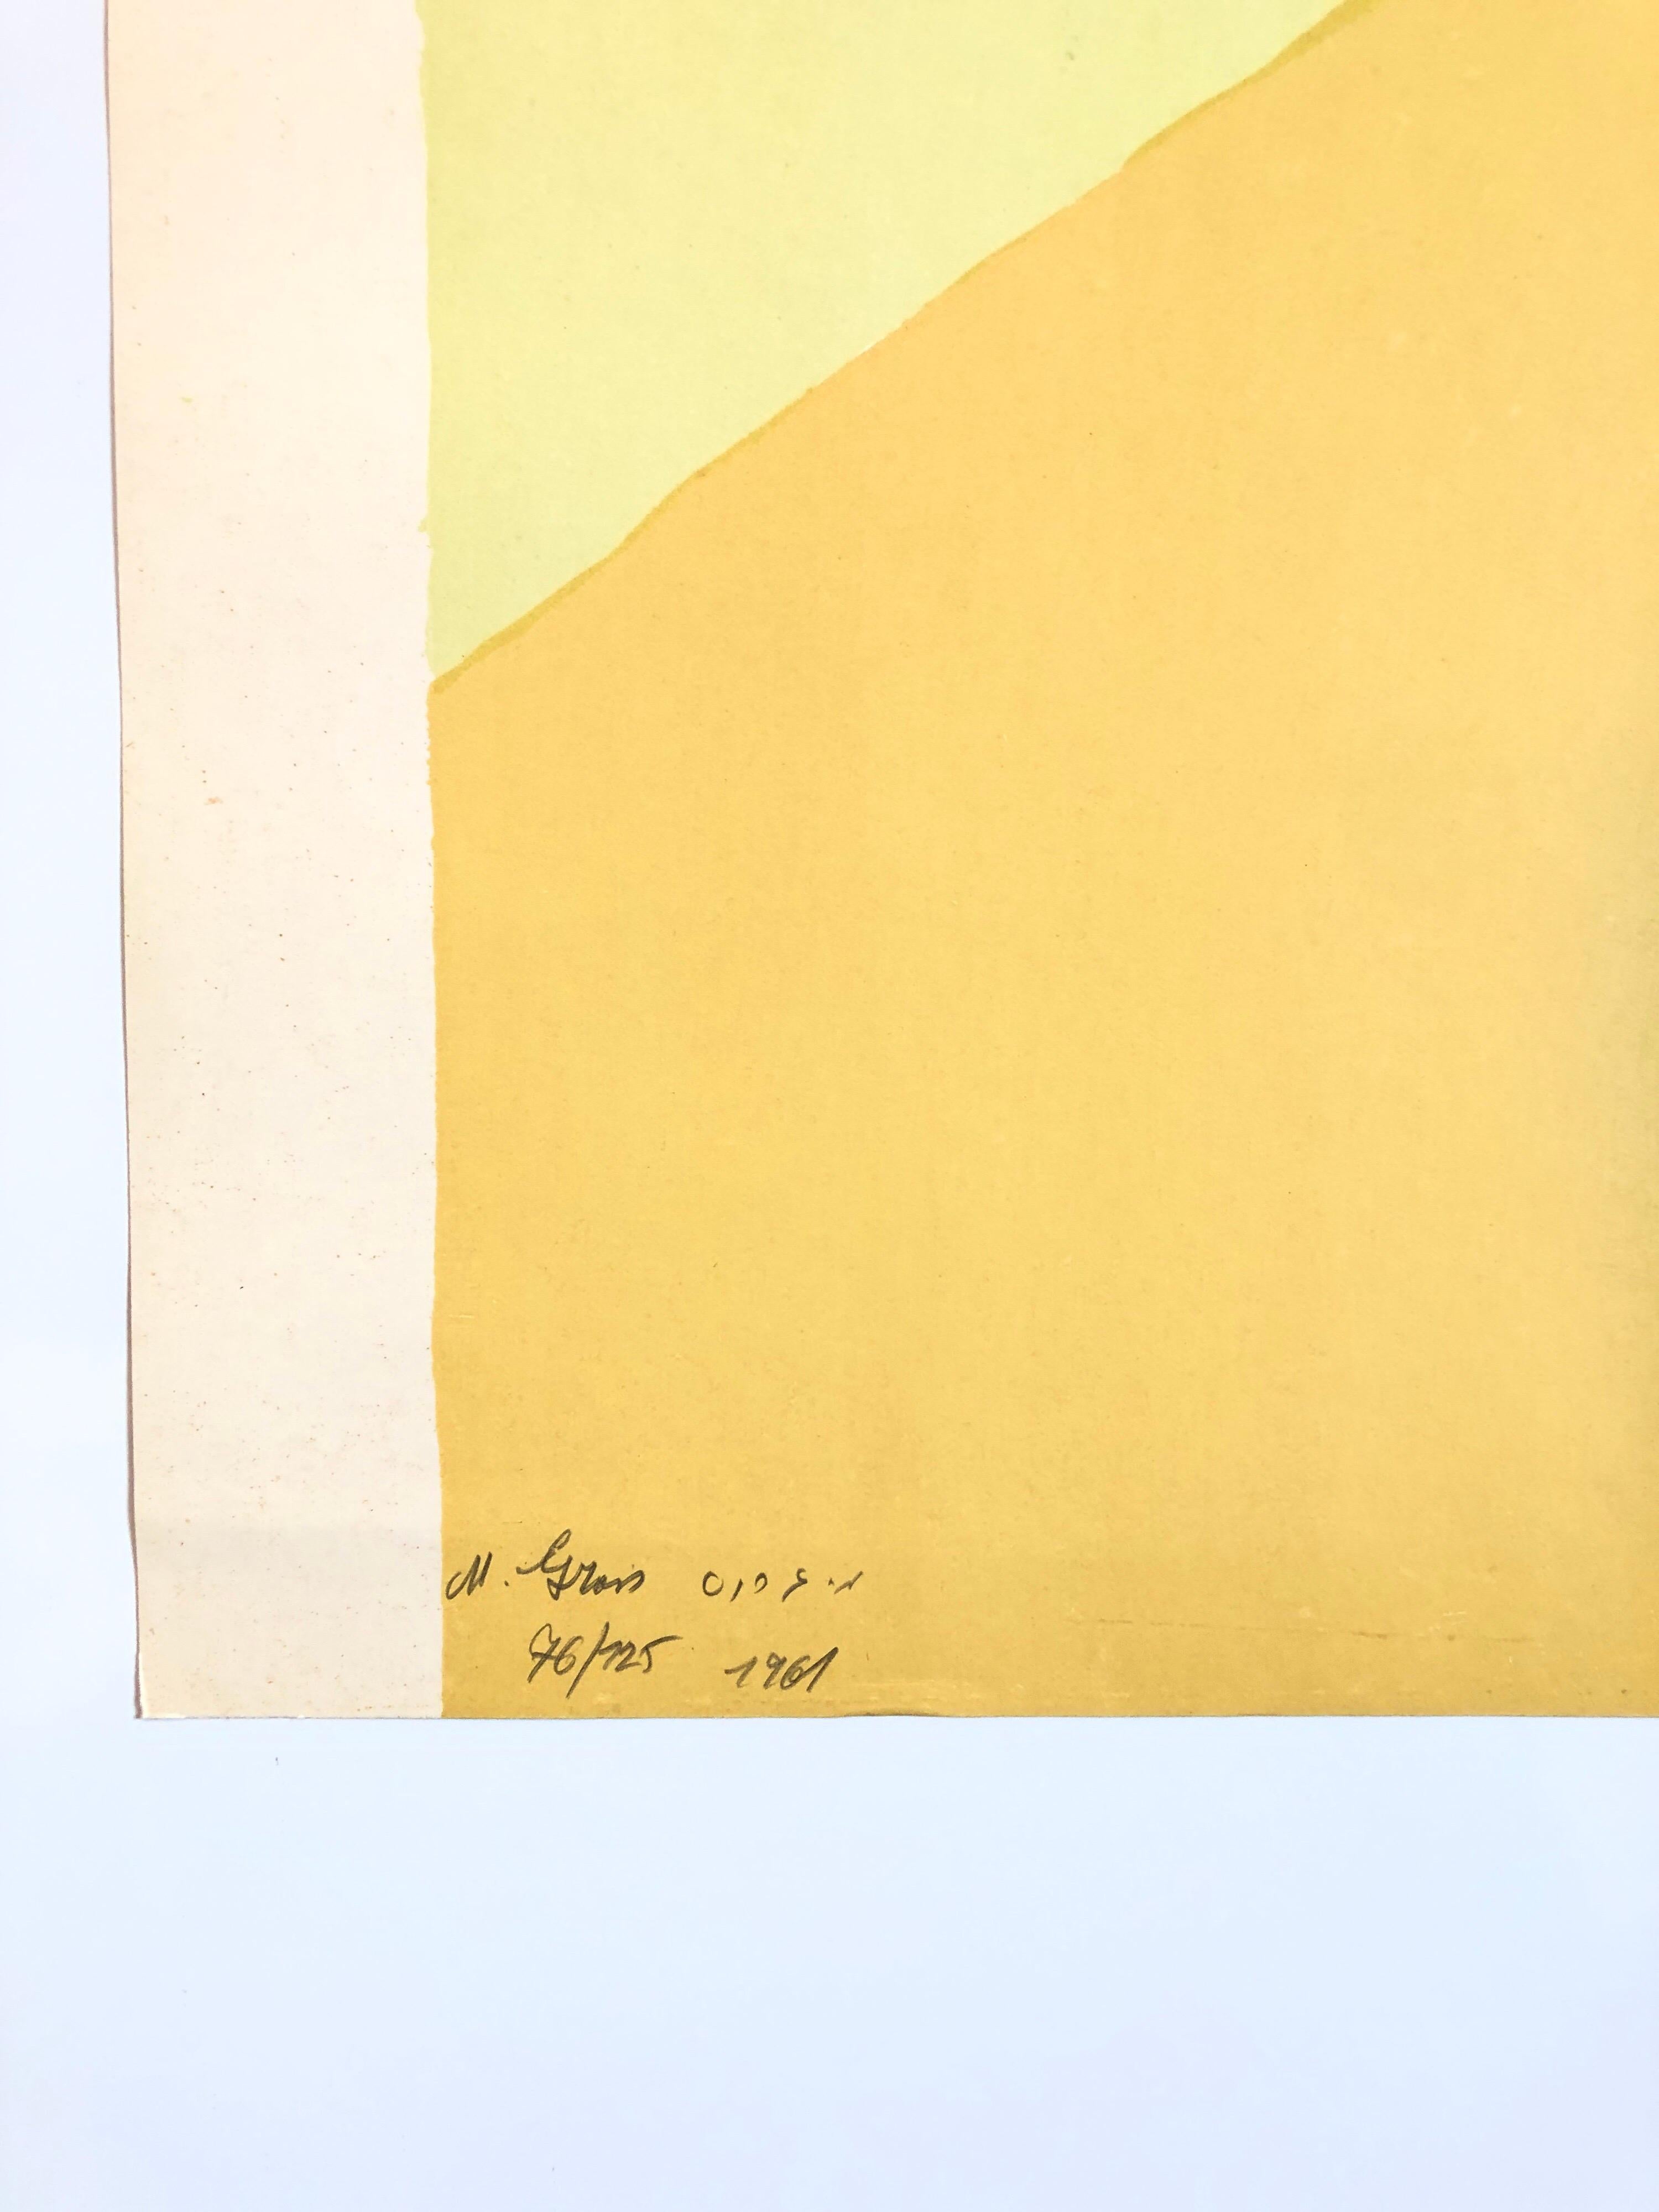 1959 Israeli Michael Gross Color Field Modernist Serigraph 